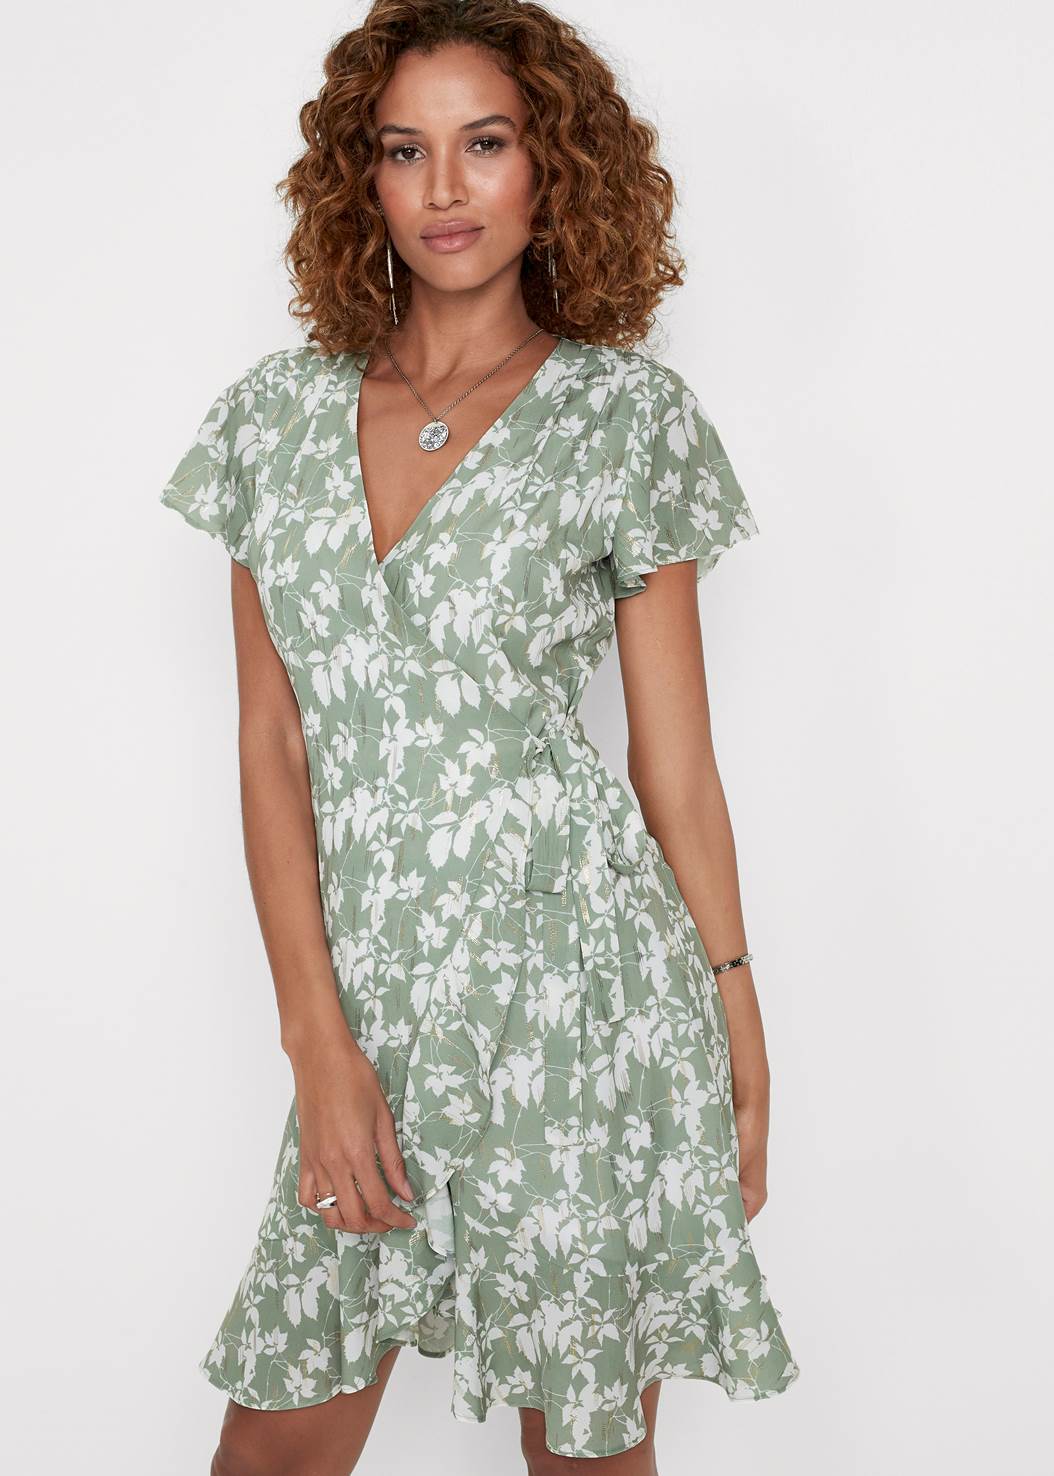 Floral Ruffle Detail Dress - Green Multi | VENUS